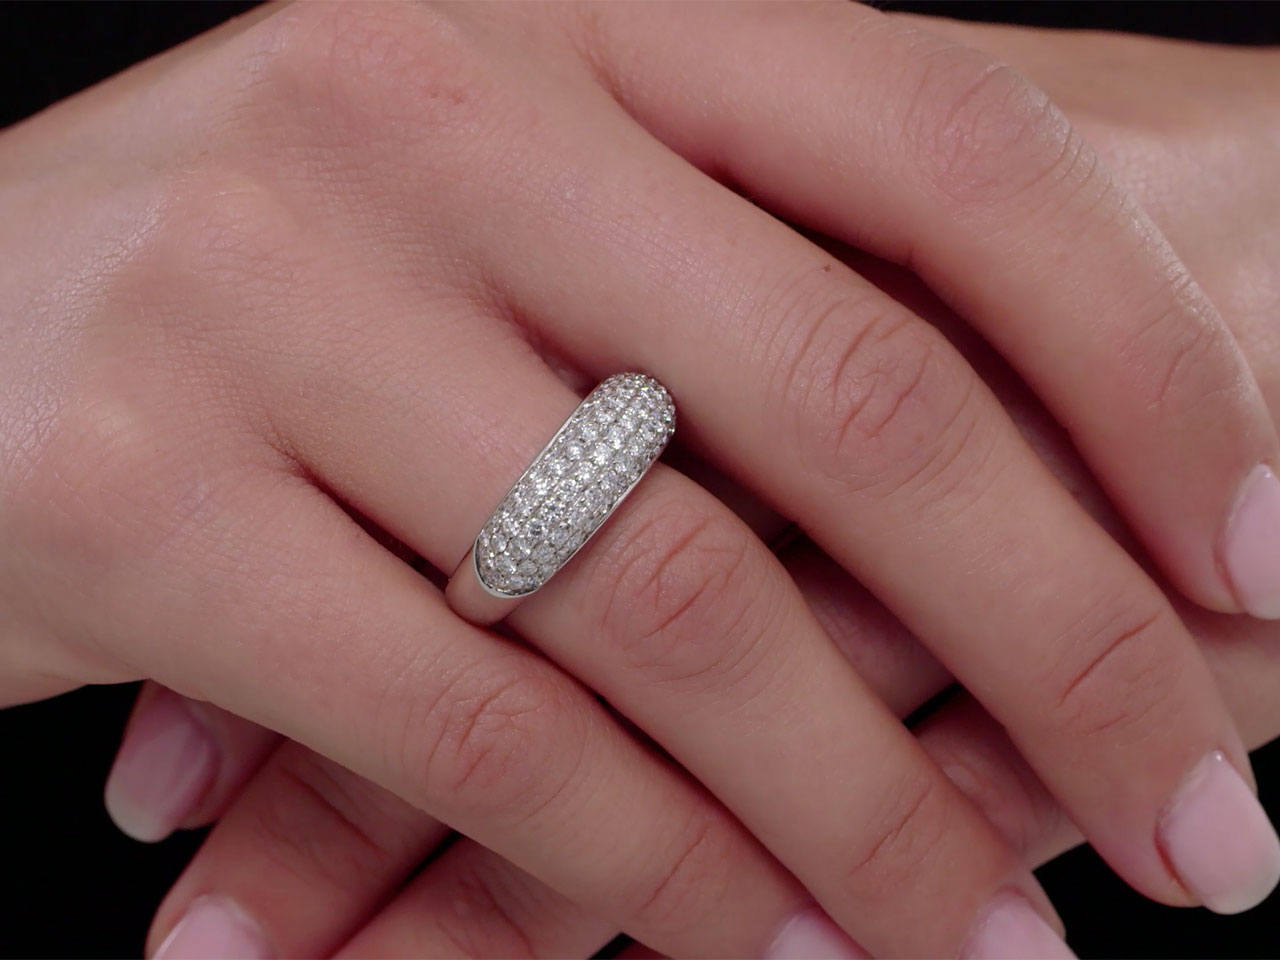 Diamond Boule Ring in 18K White Gold